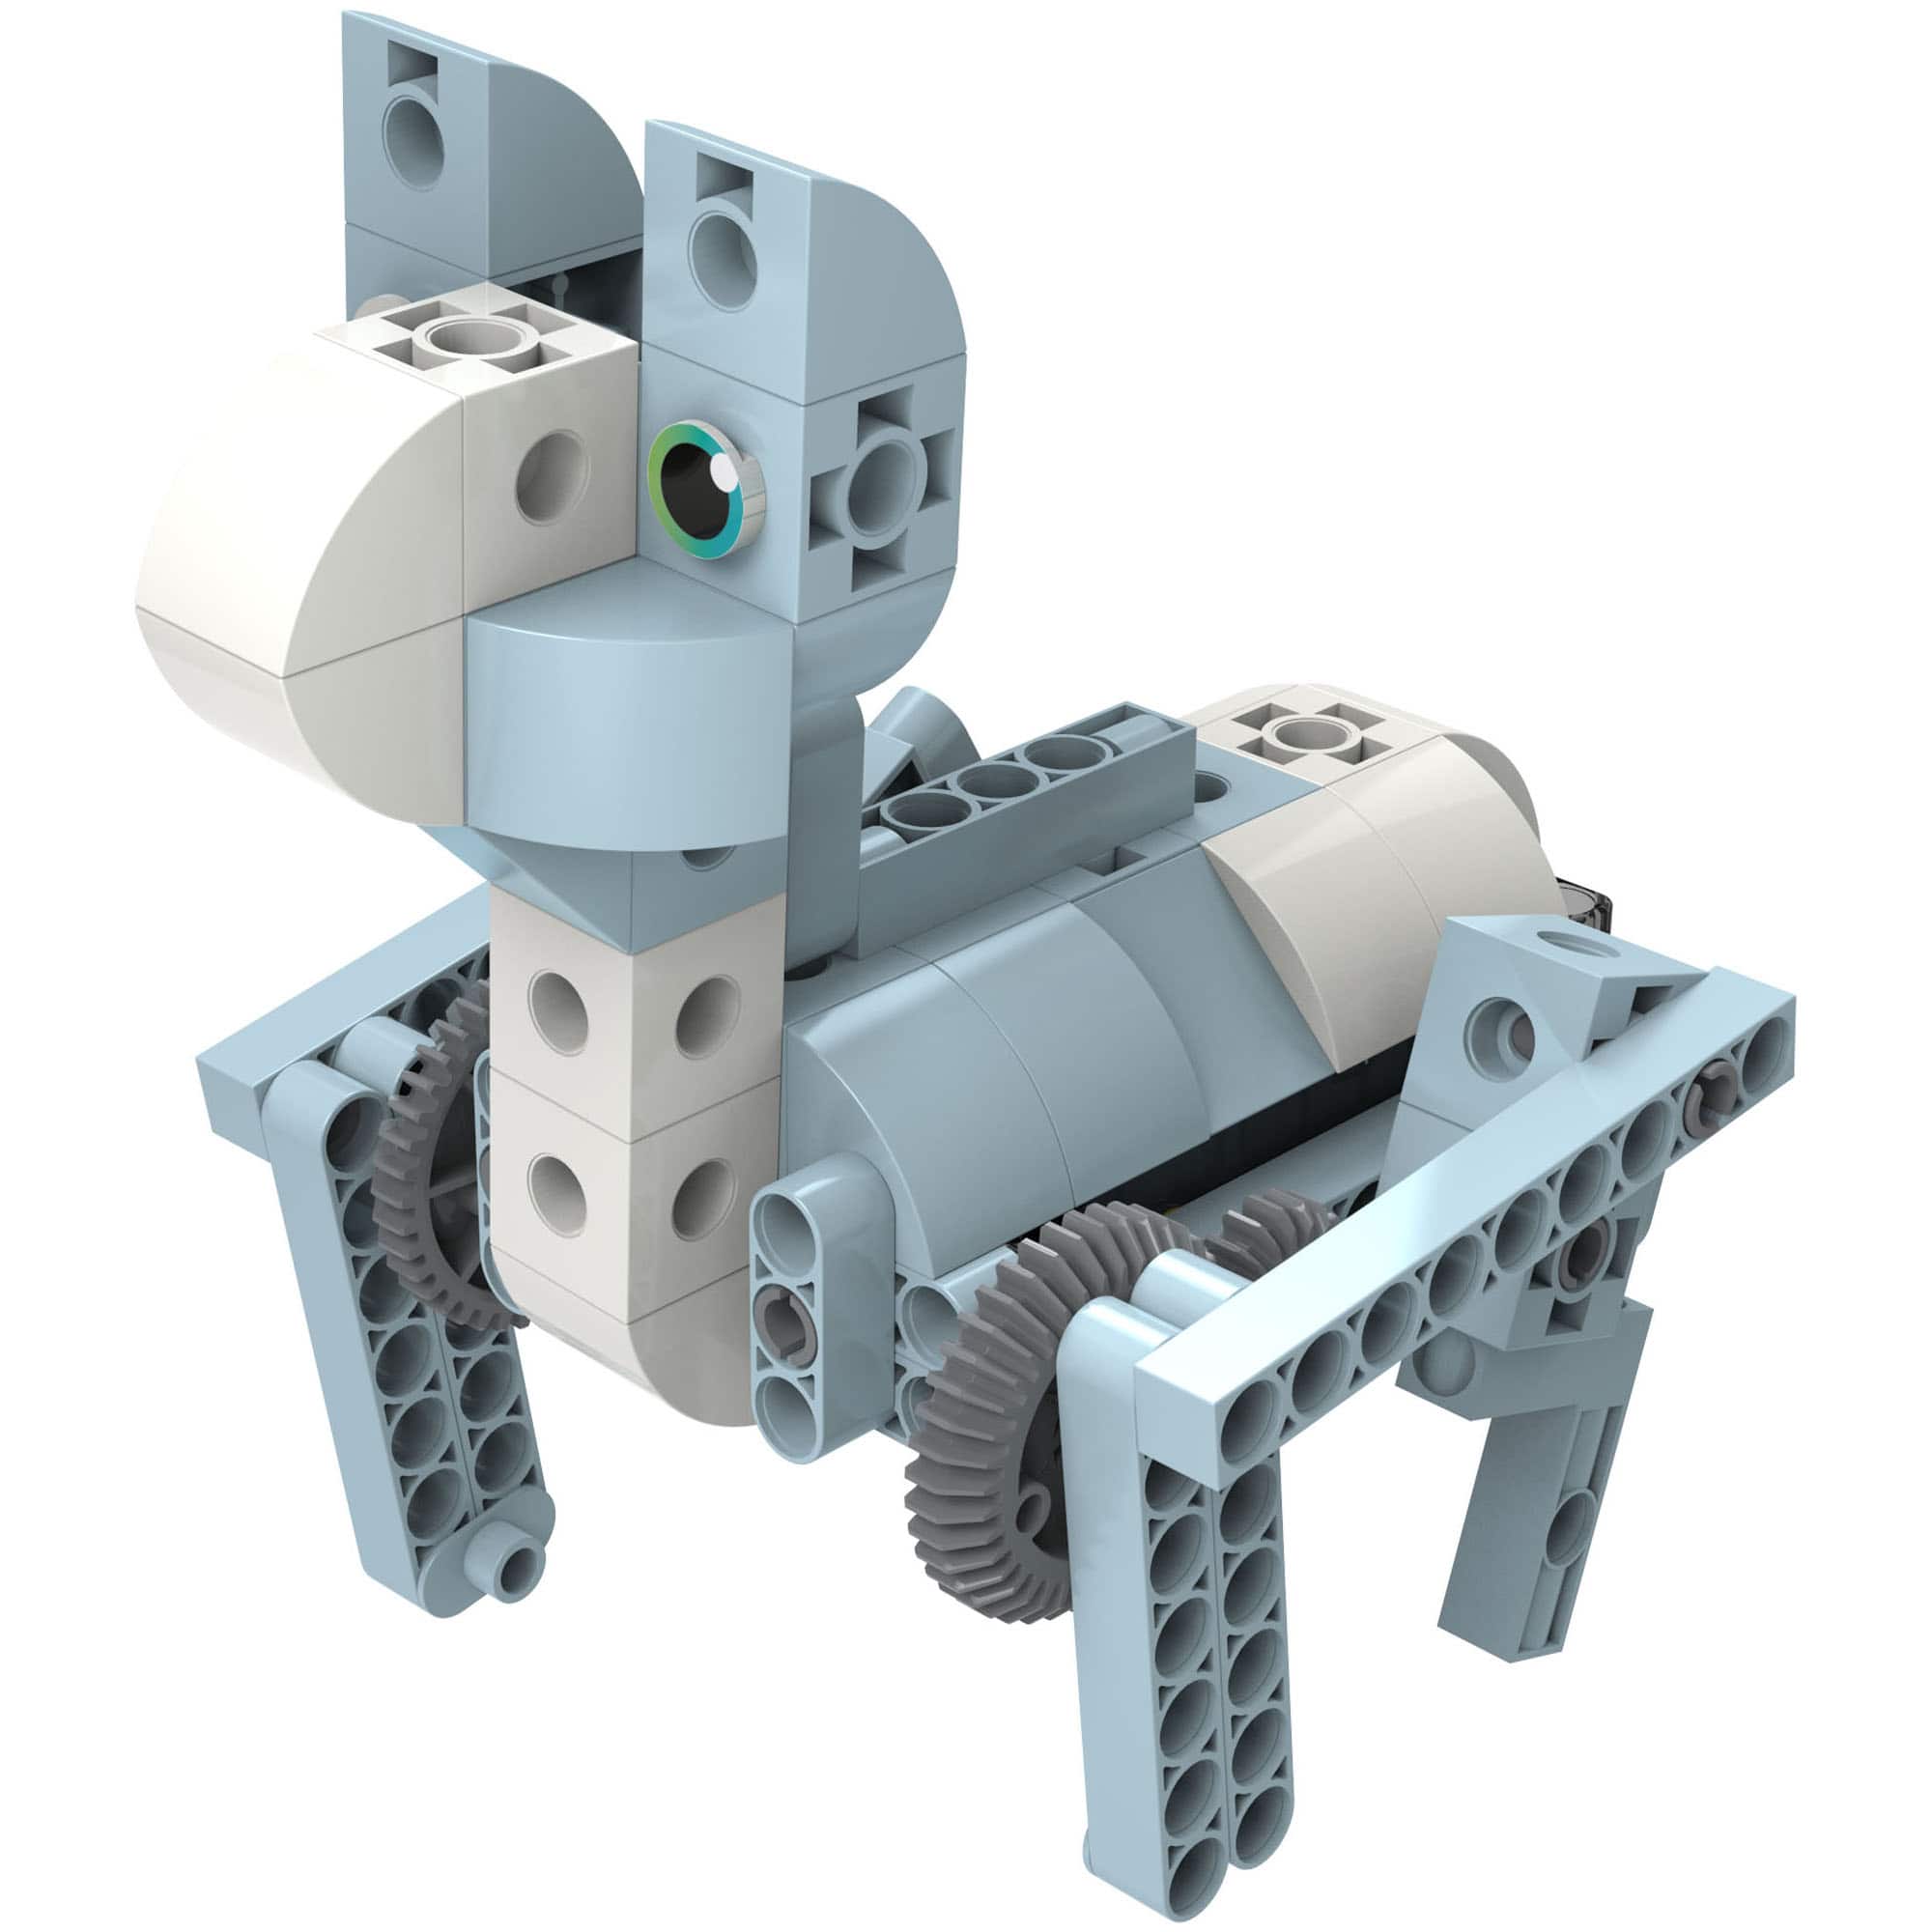 Thames &#x26; Kosmos Kids First: Robot Safari Introduction to Motorized Machines